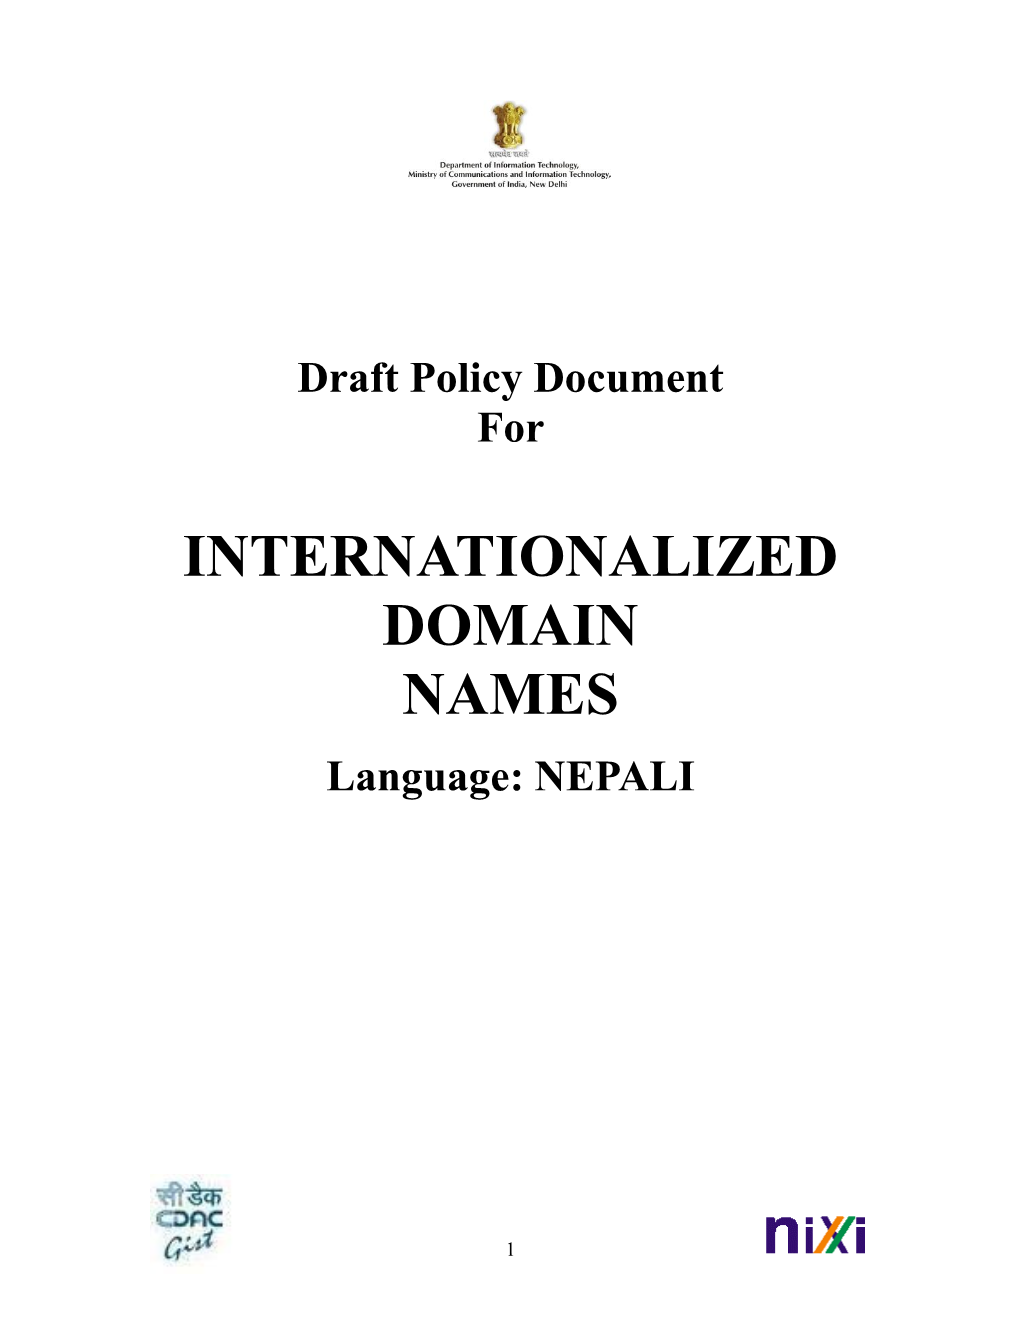 Internationalized Domain Names-Hindi